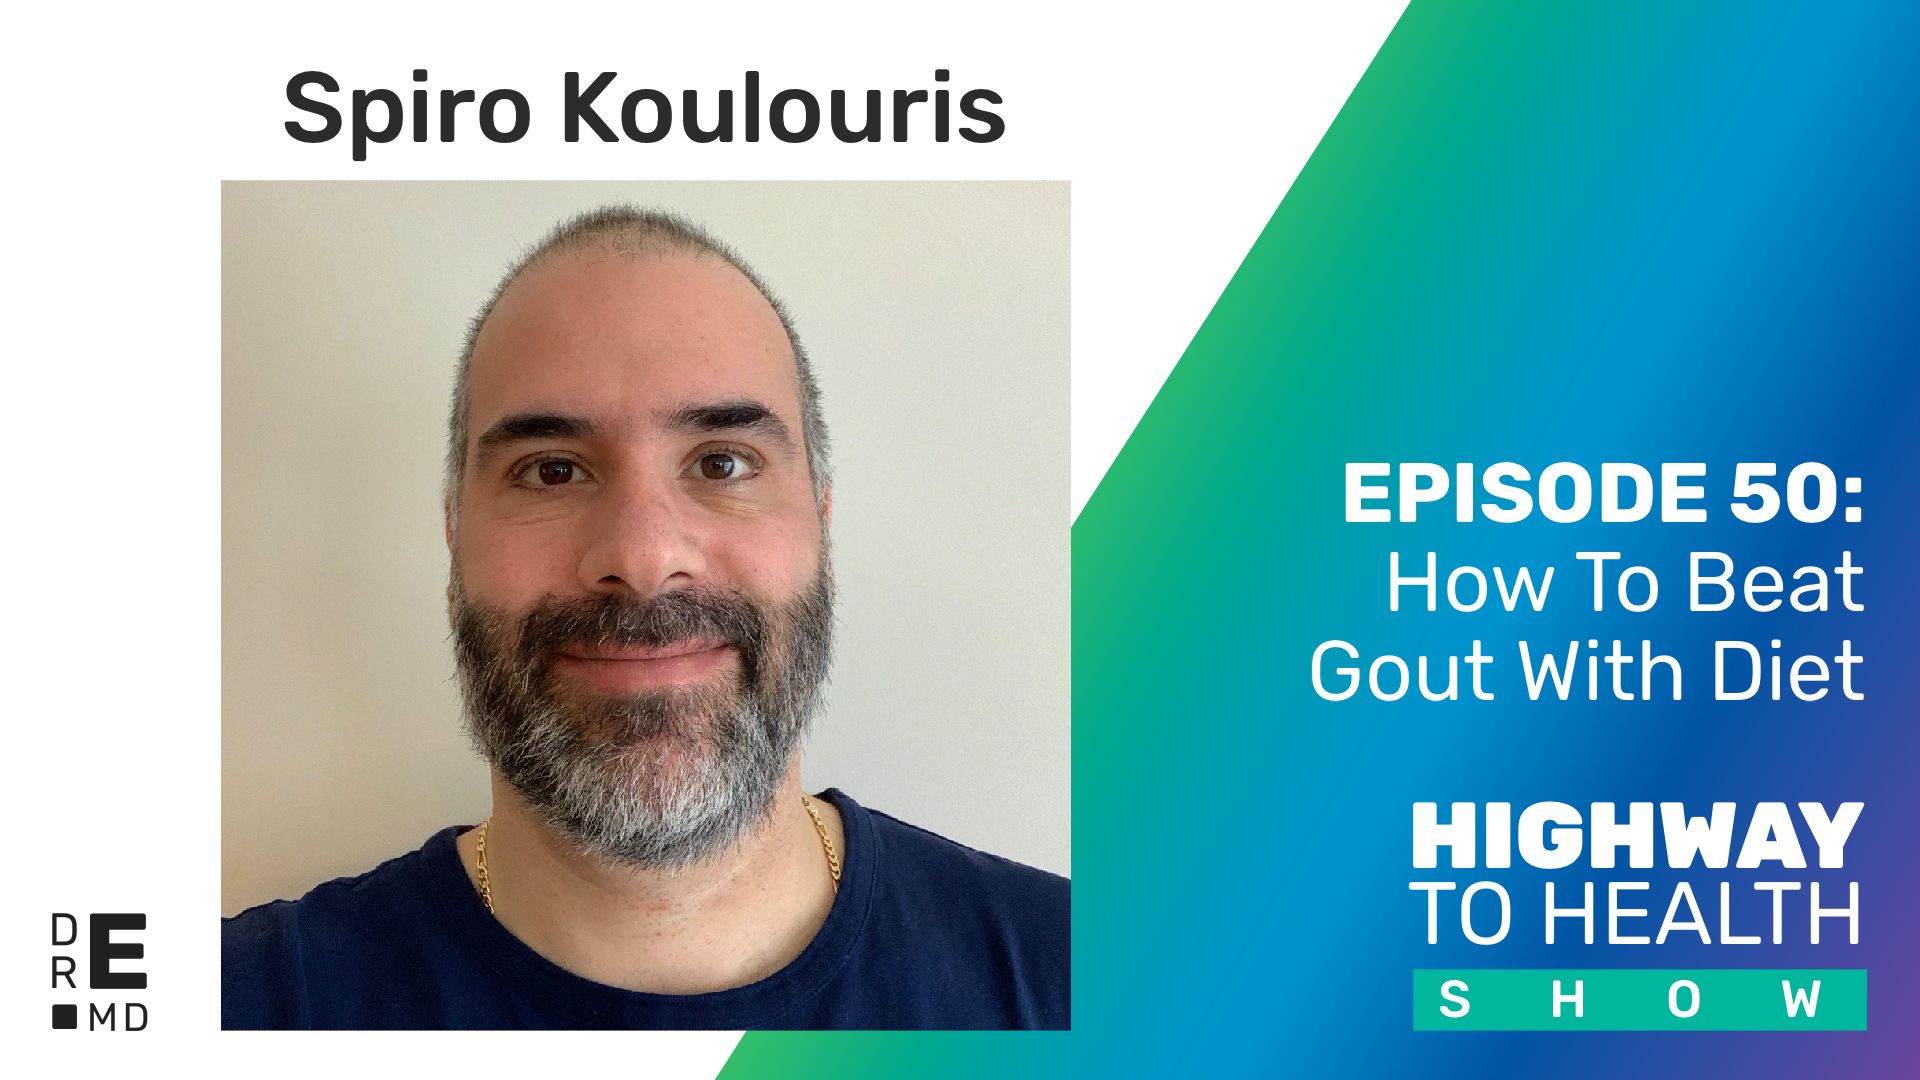 Highway to Health: Ep 50 - Spiro Kolouris